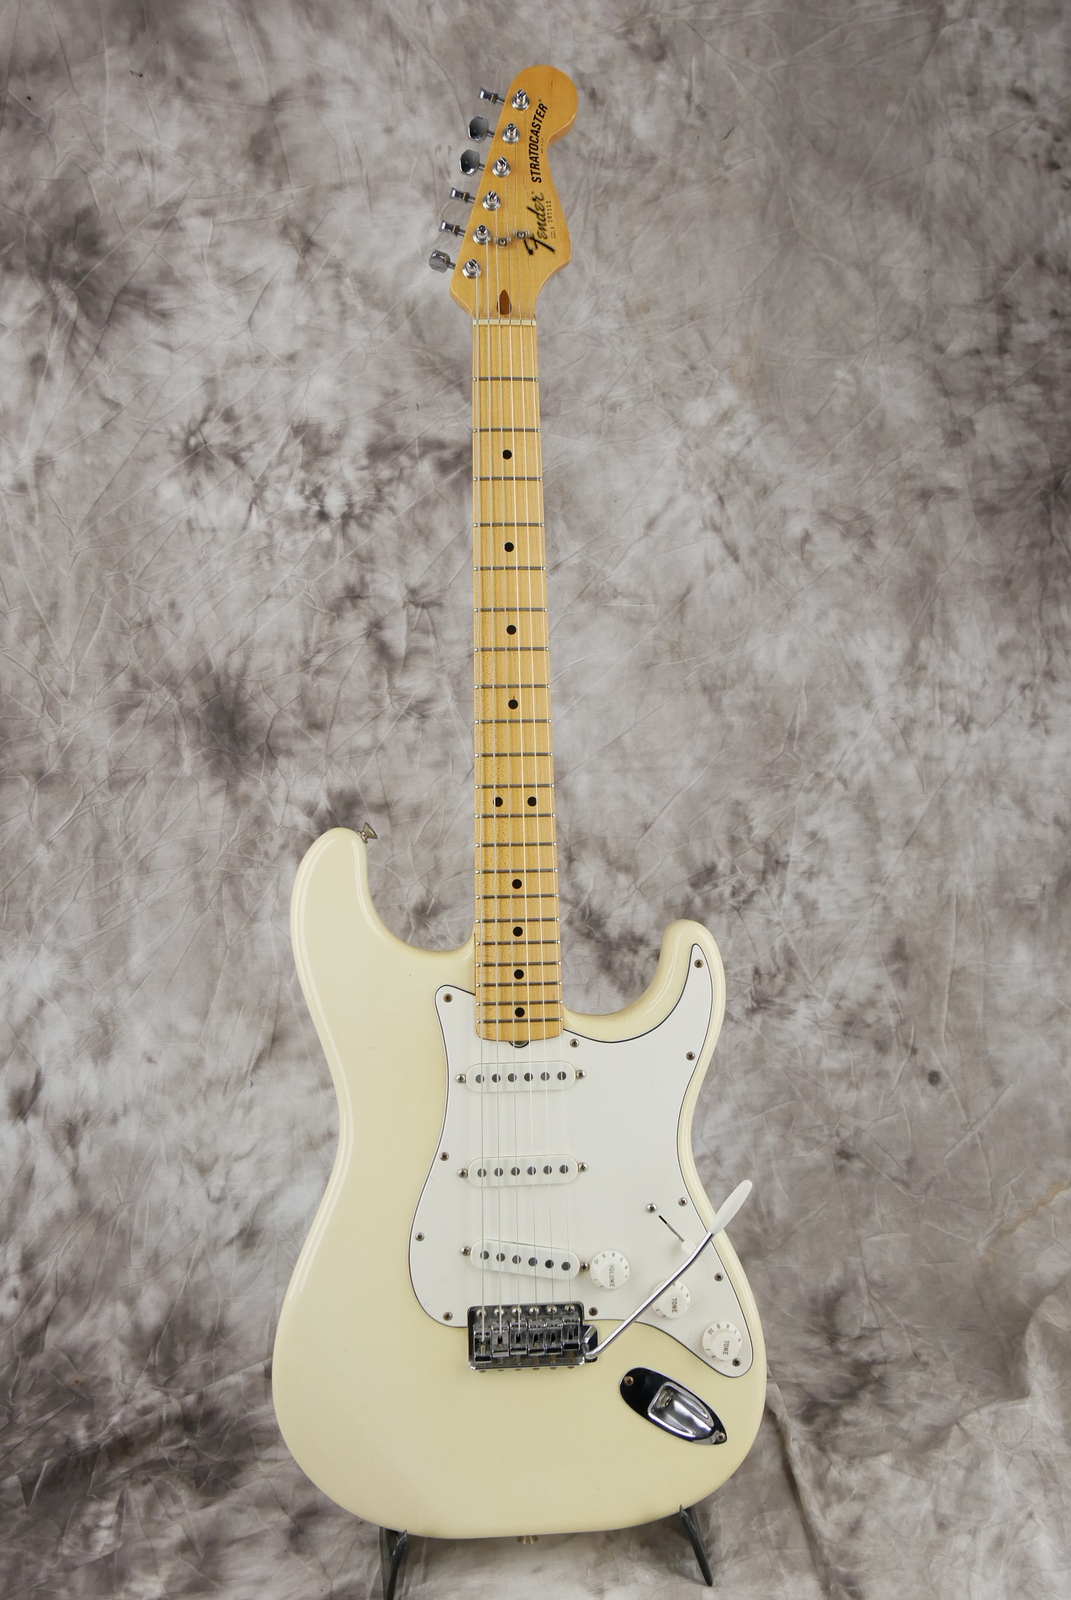 Fender_Stratocaster_Dan_smith_1982_tremolo_hardcase-001.JPG